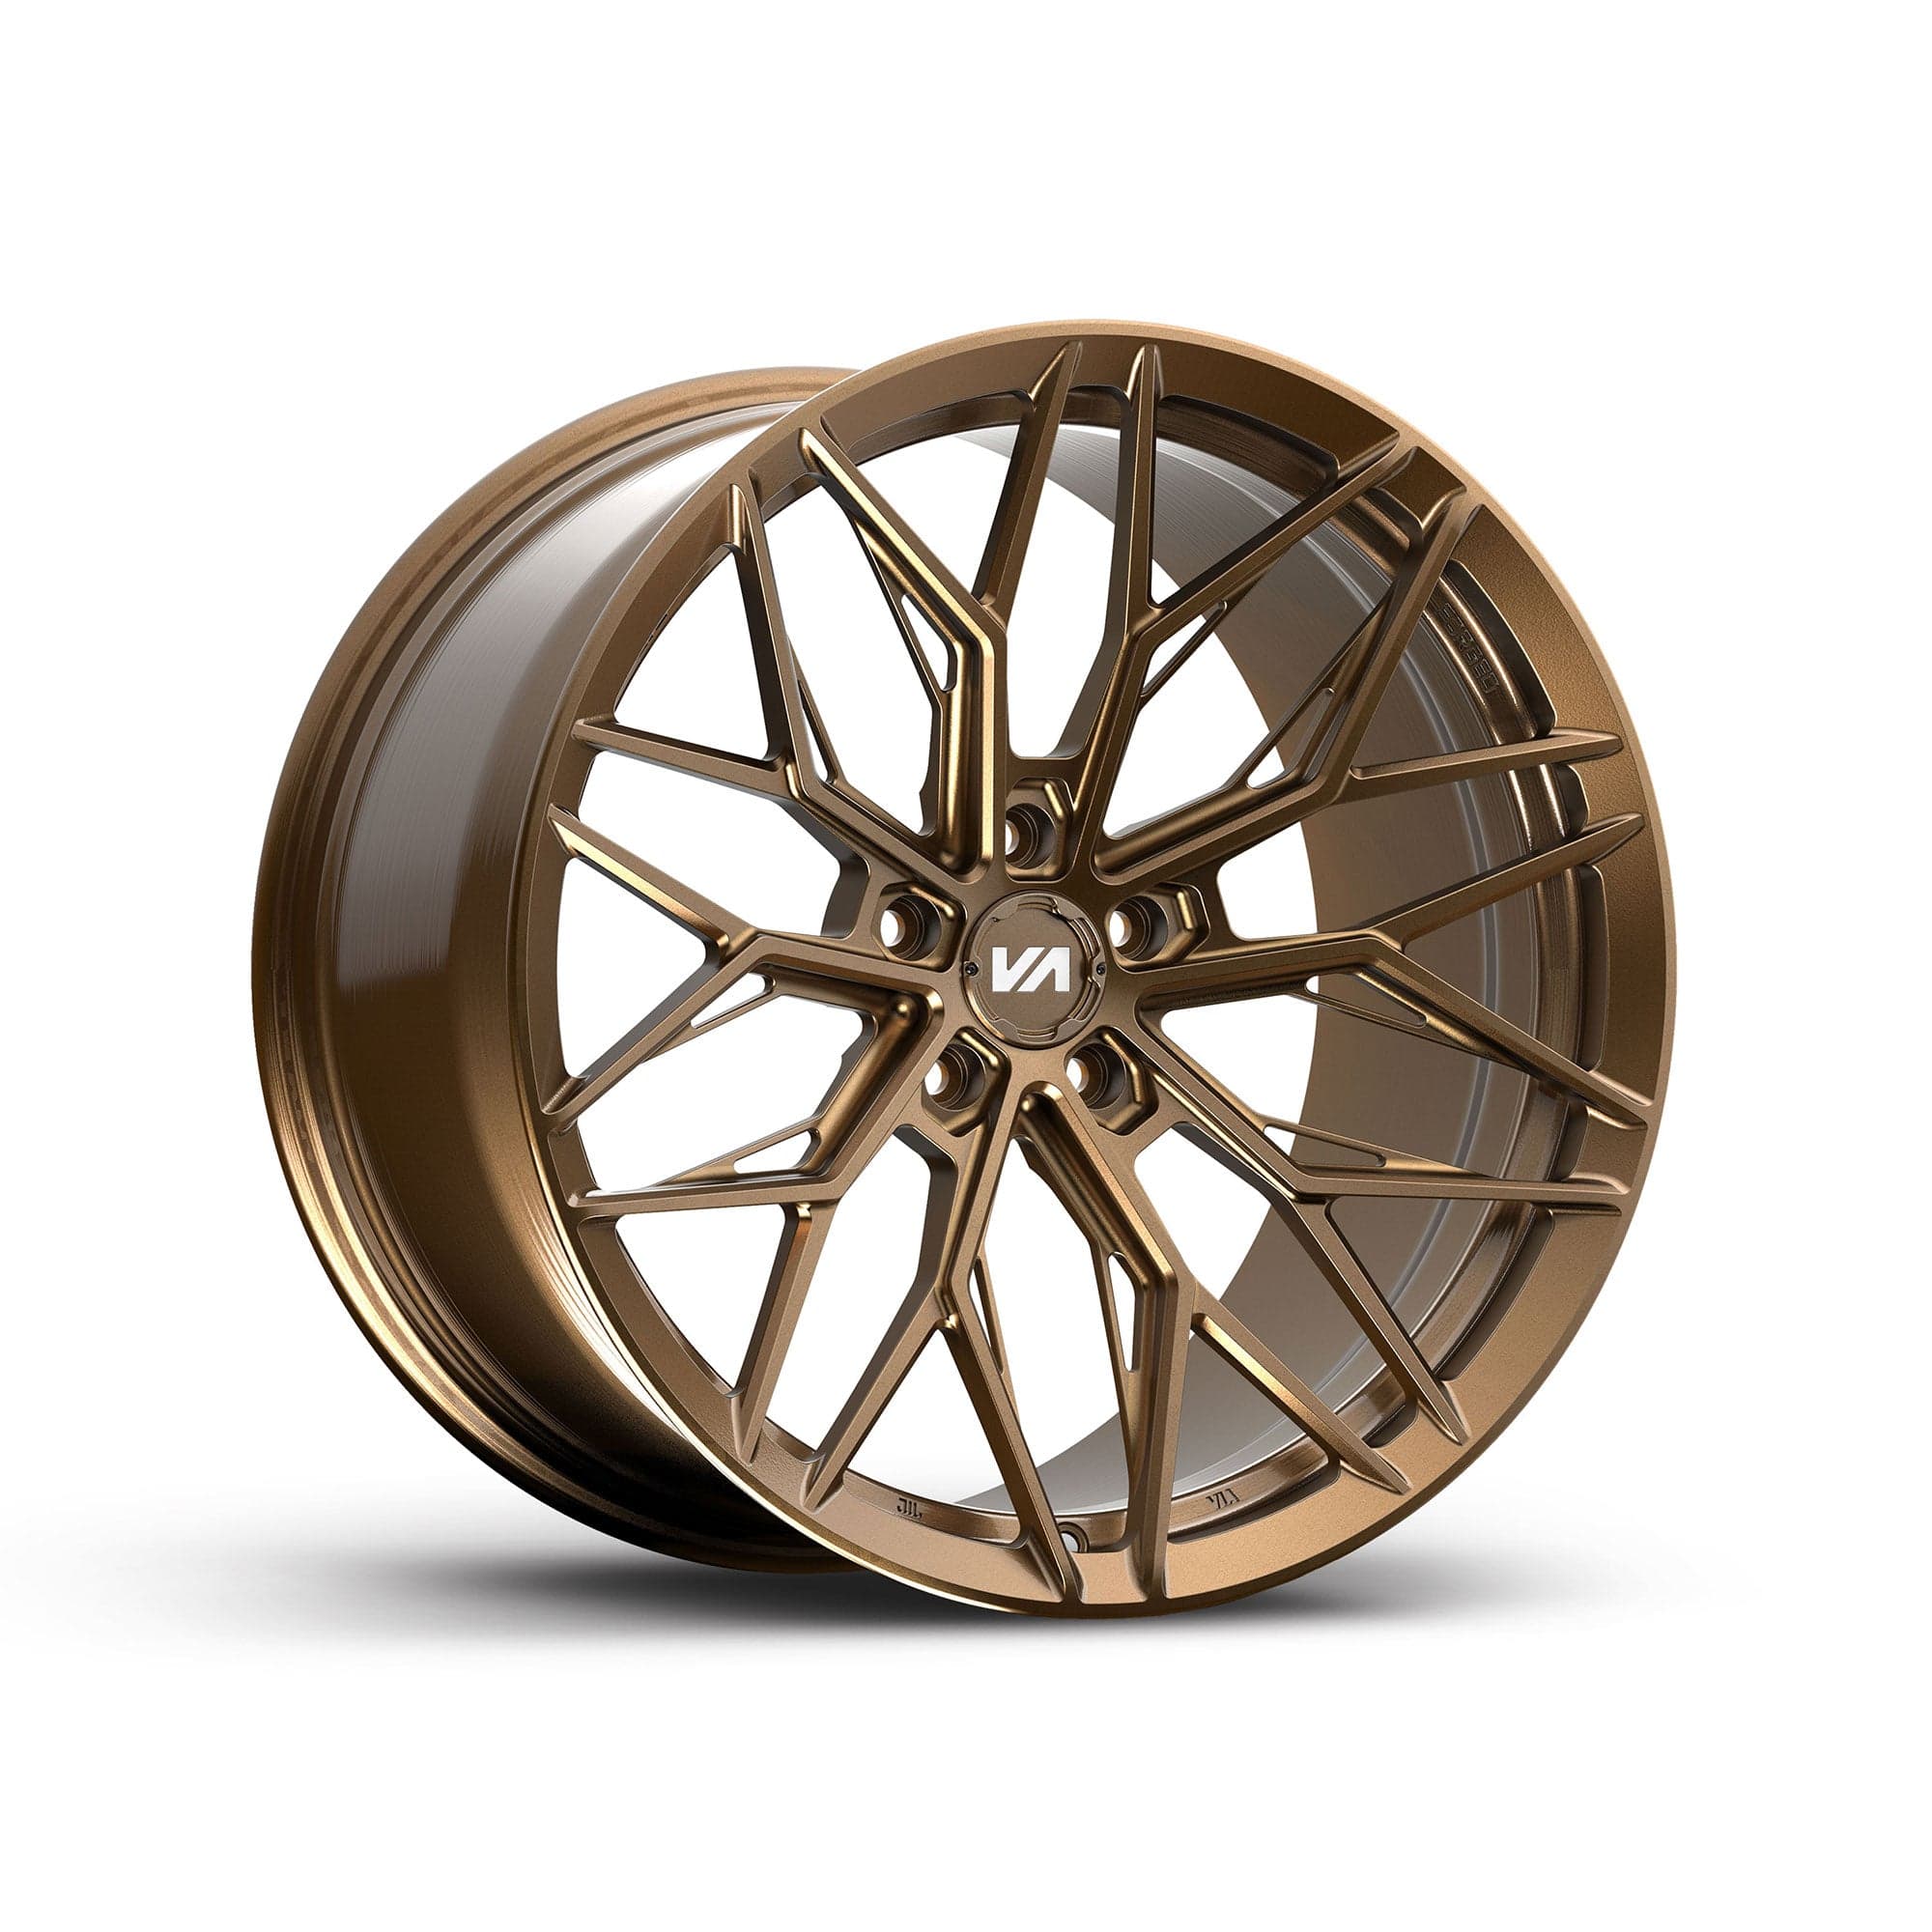 Kies-Motorsports Variant Variant™ Maxim Collection Alloy Wheels 19x11 (Super Deep)